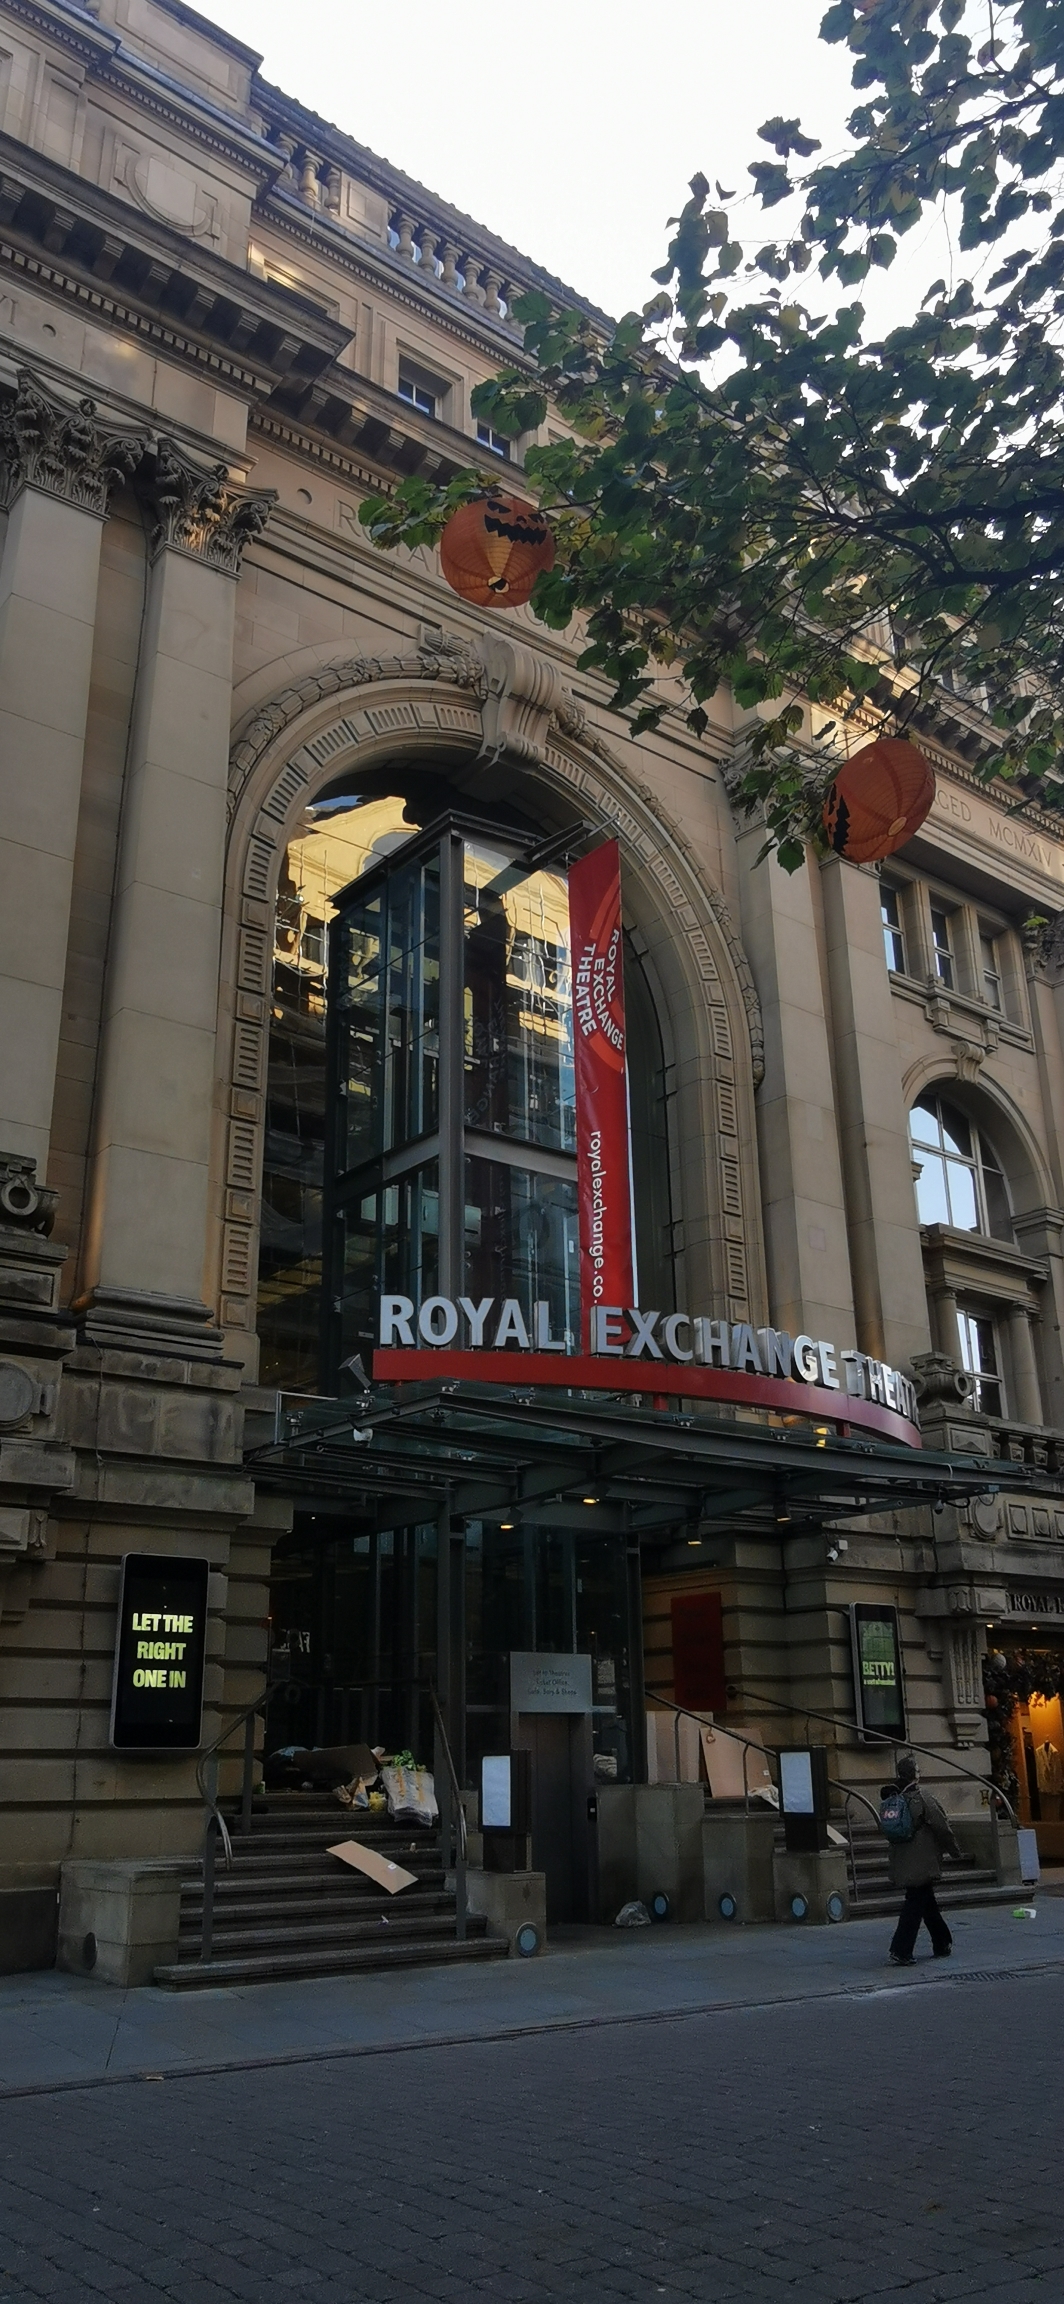 Photo taken between Royal Exchange and Cross Street